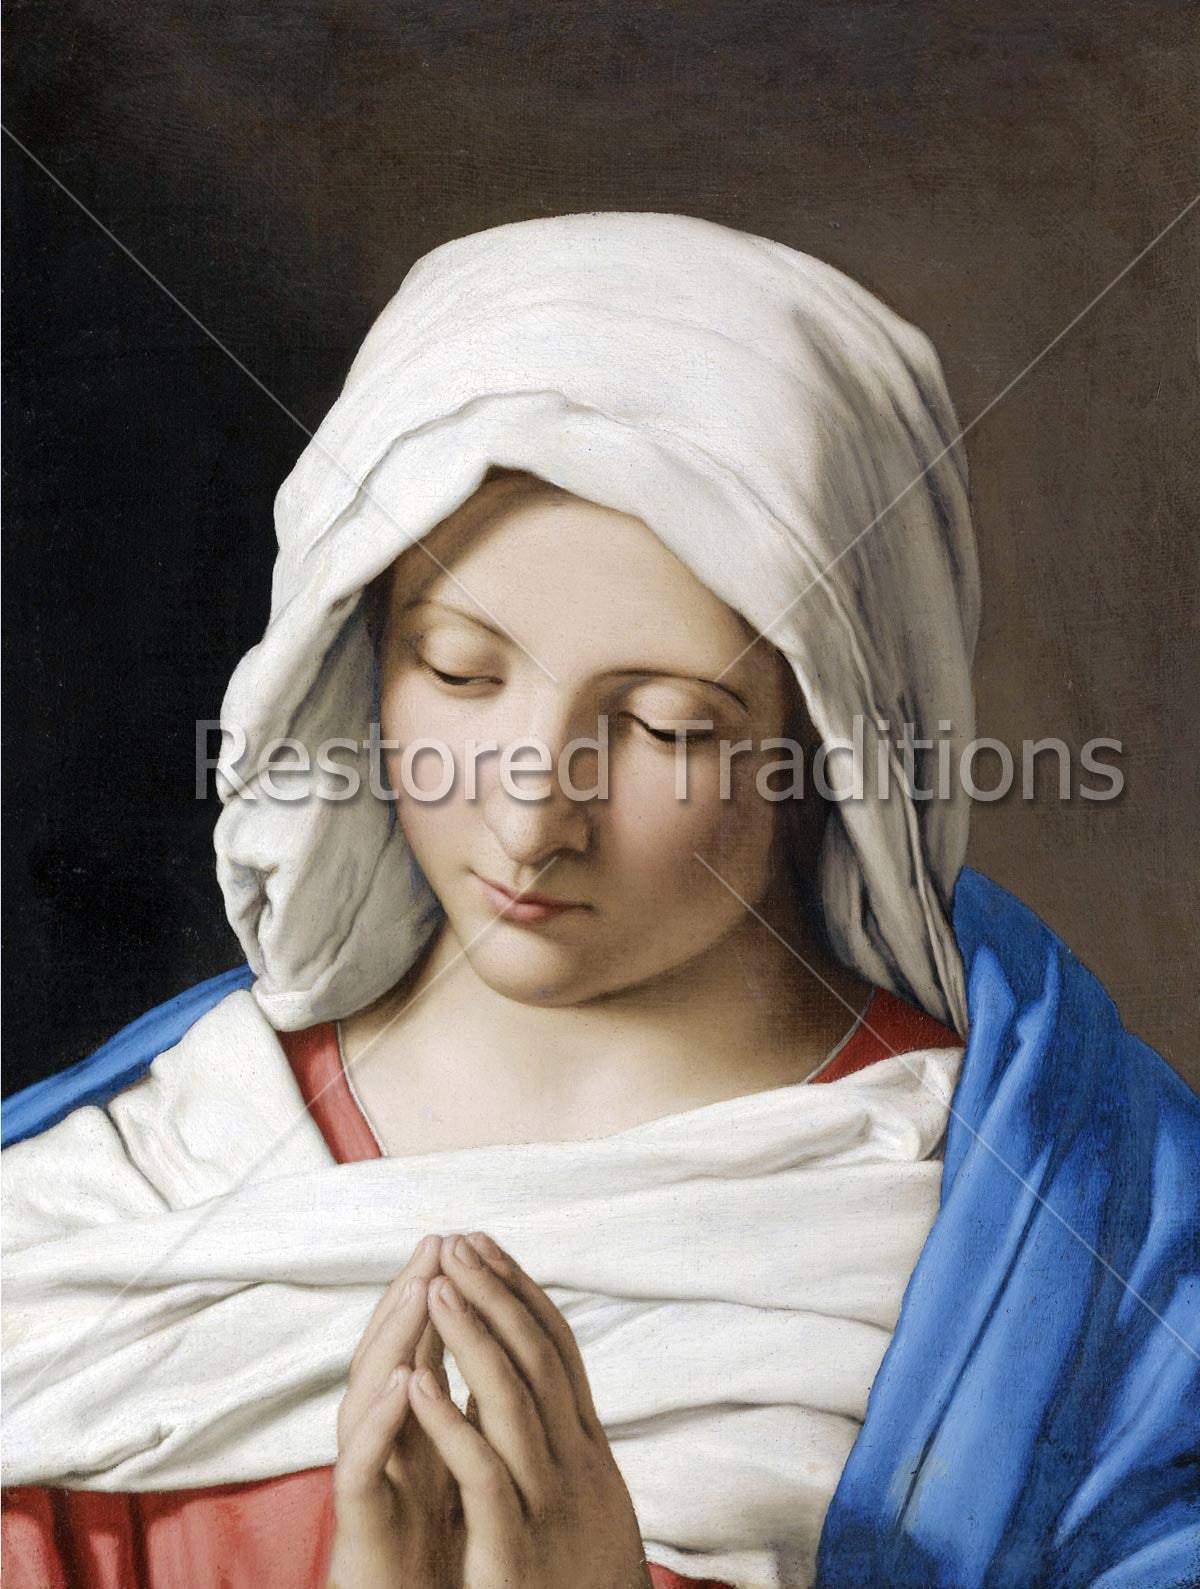  mary praying the rosary mary praying on knees mary praying tattoo mary